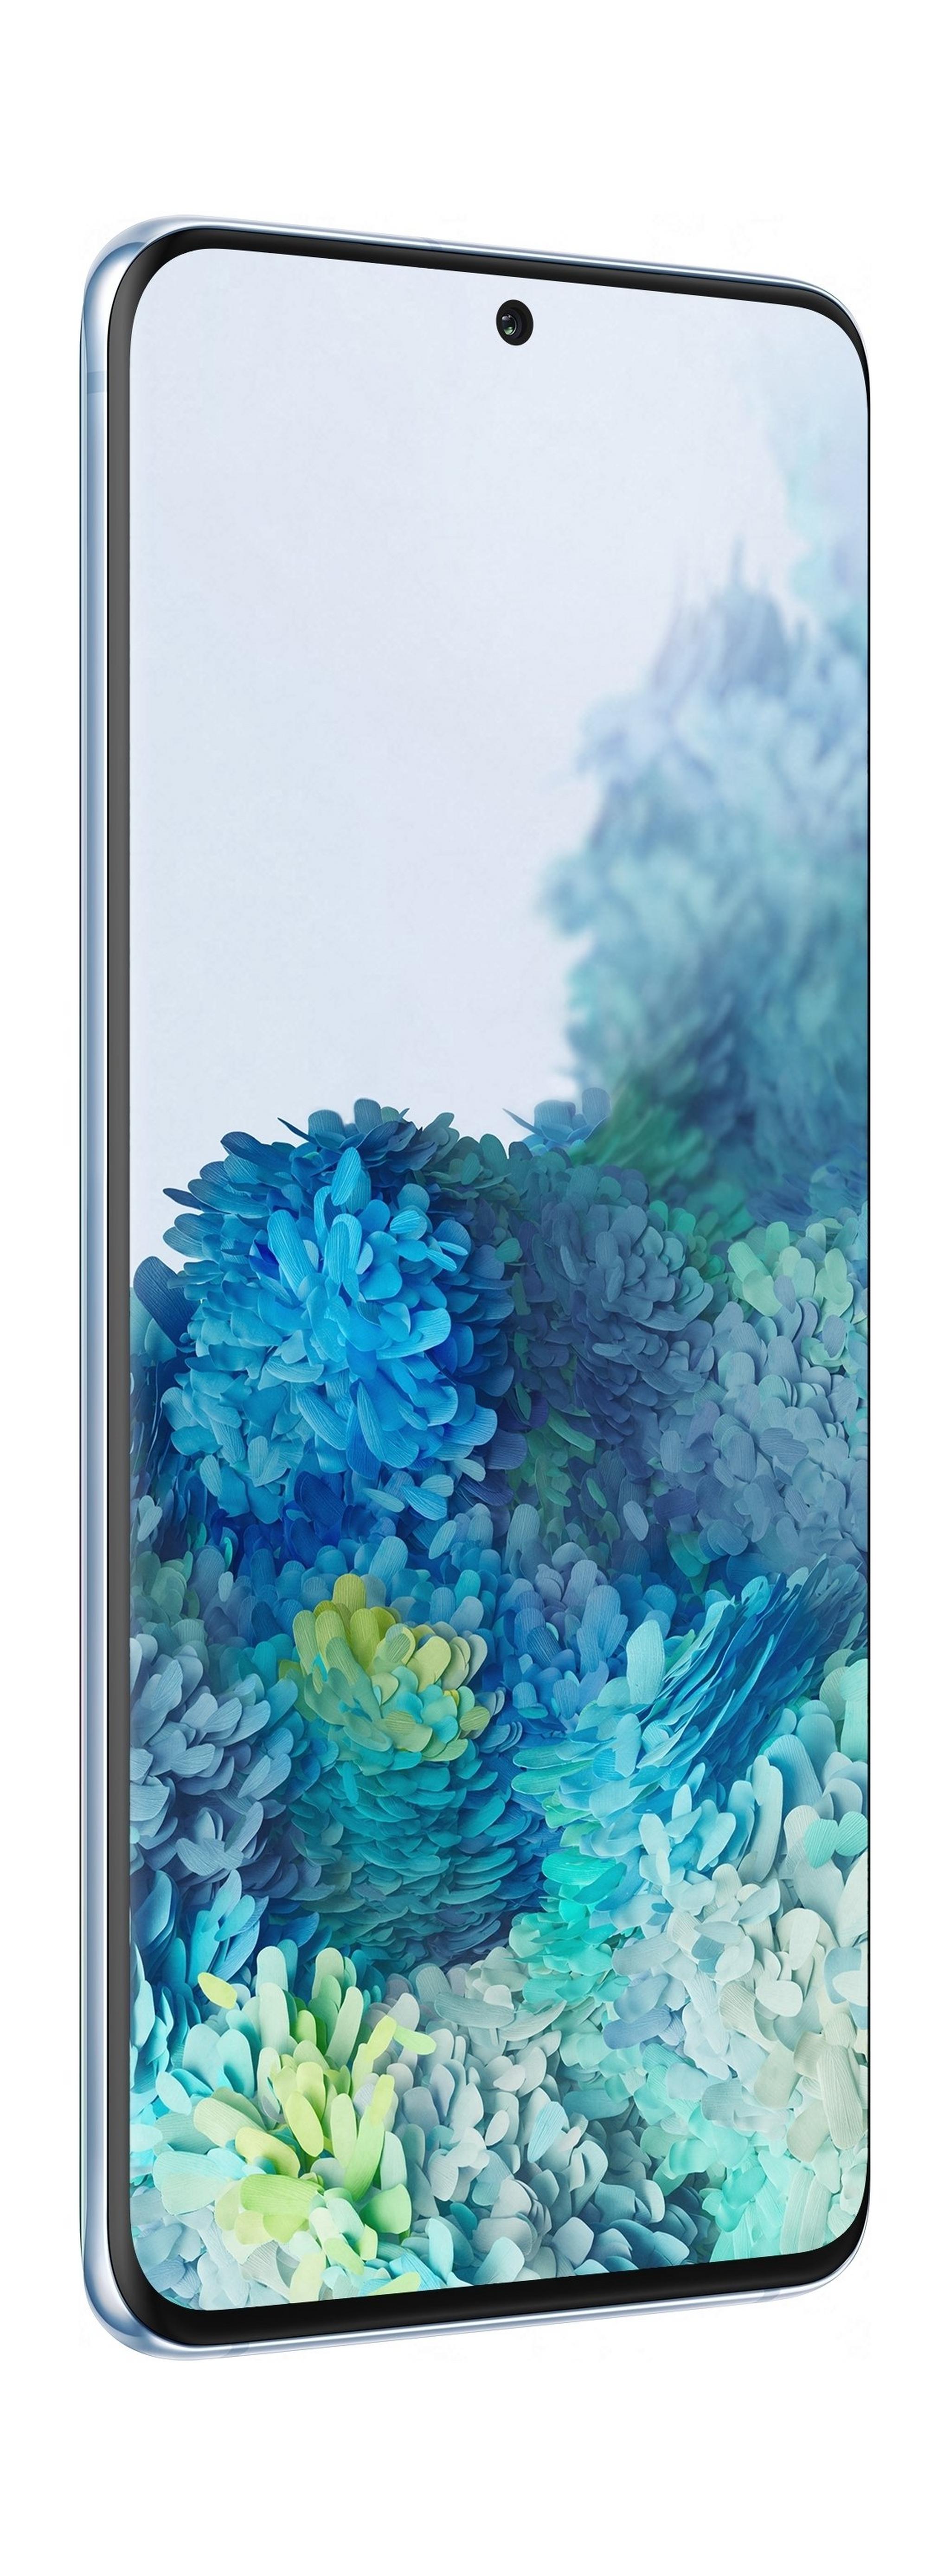 Samsung Galaxy S20 Plus 128GB Phone - Blue